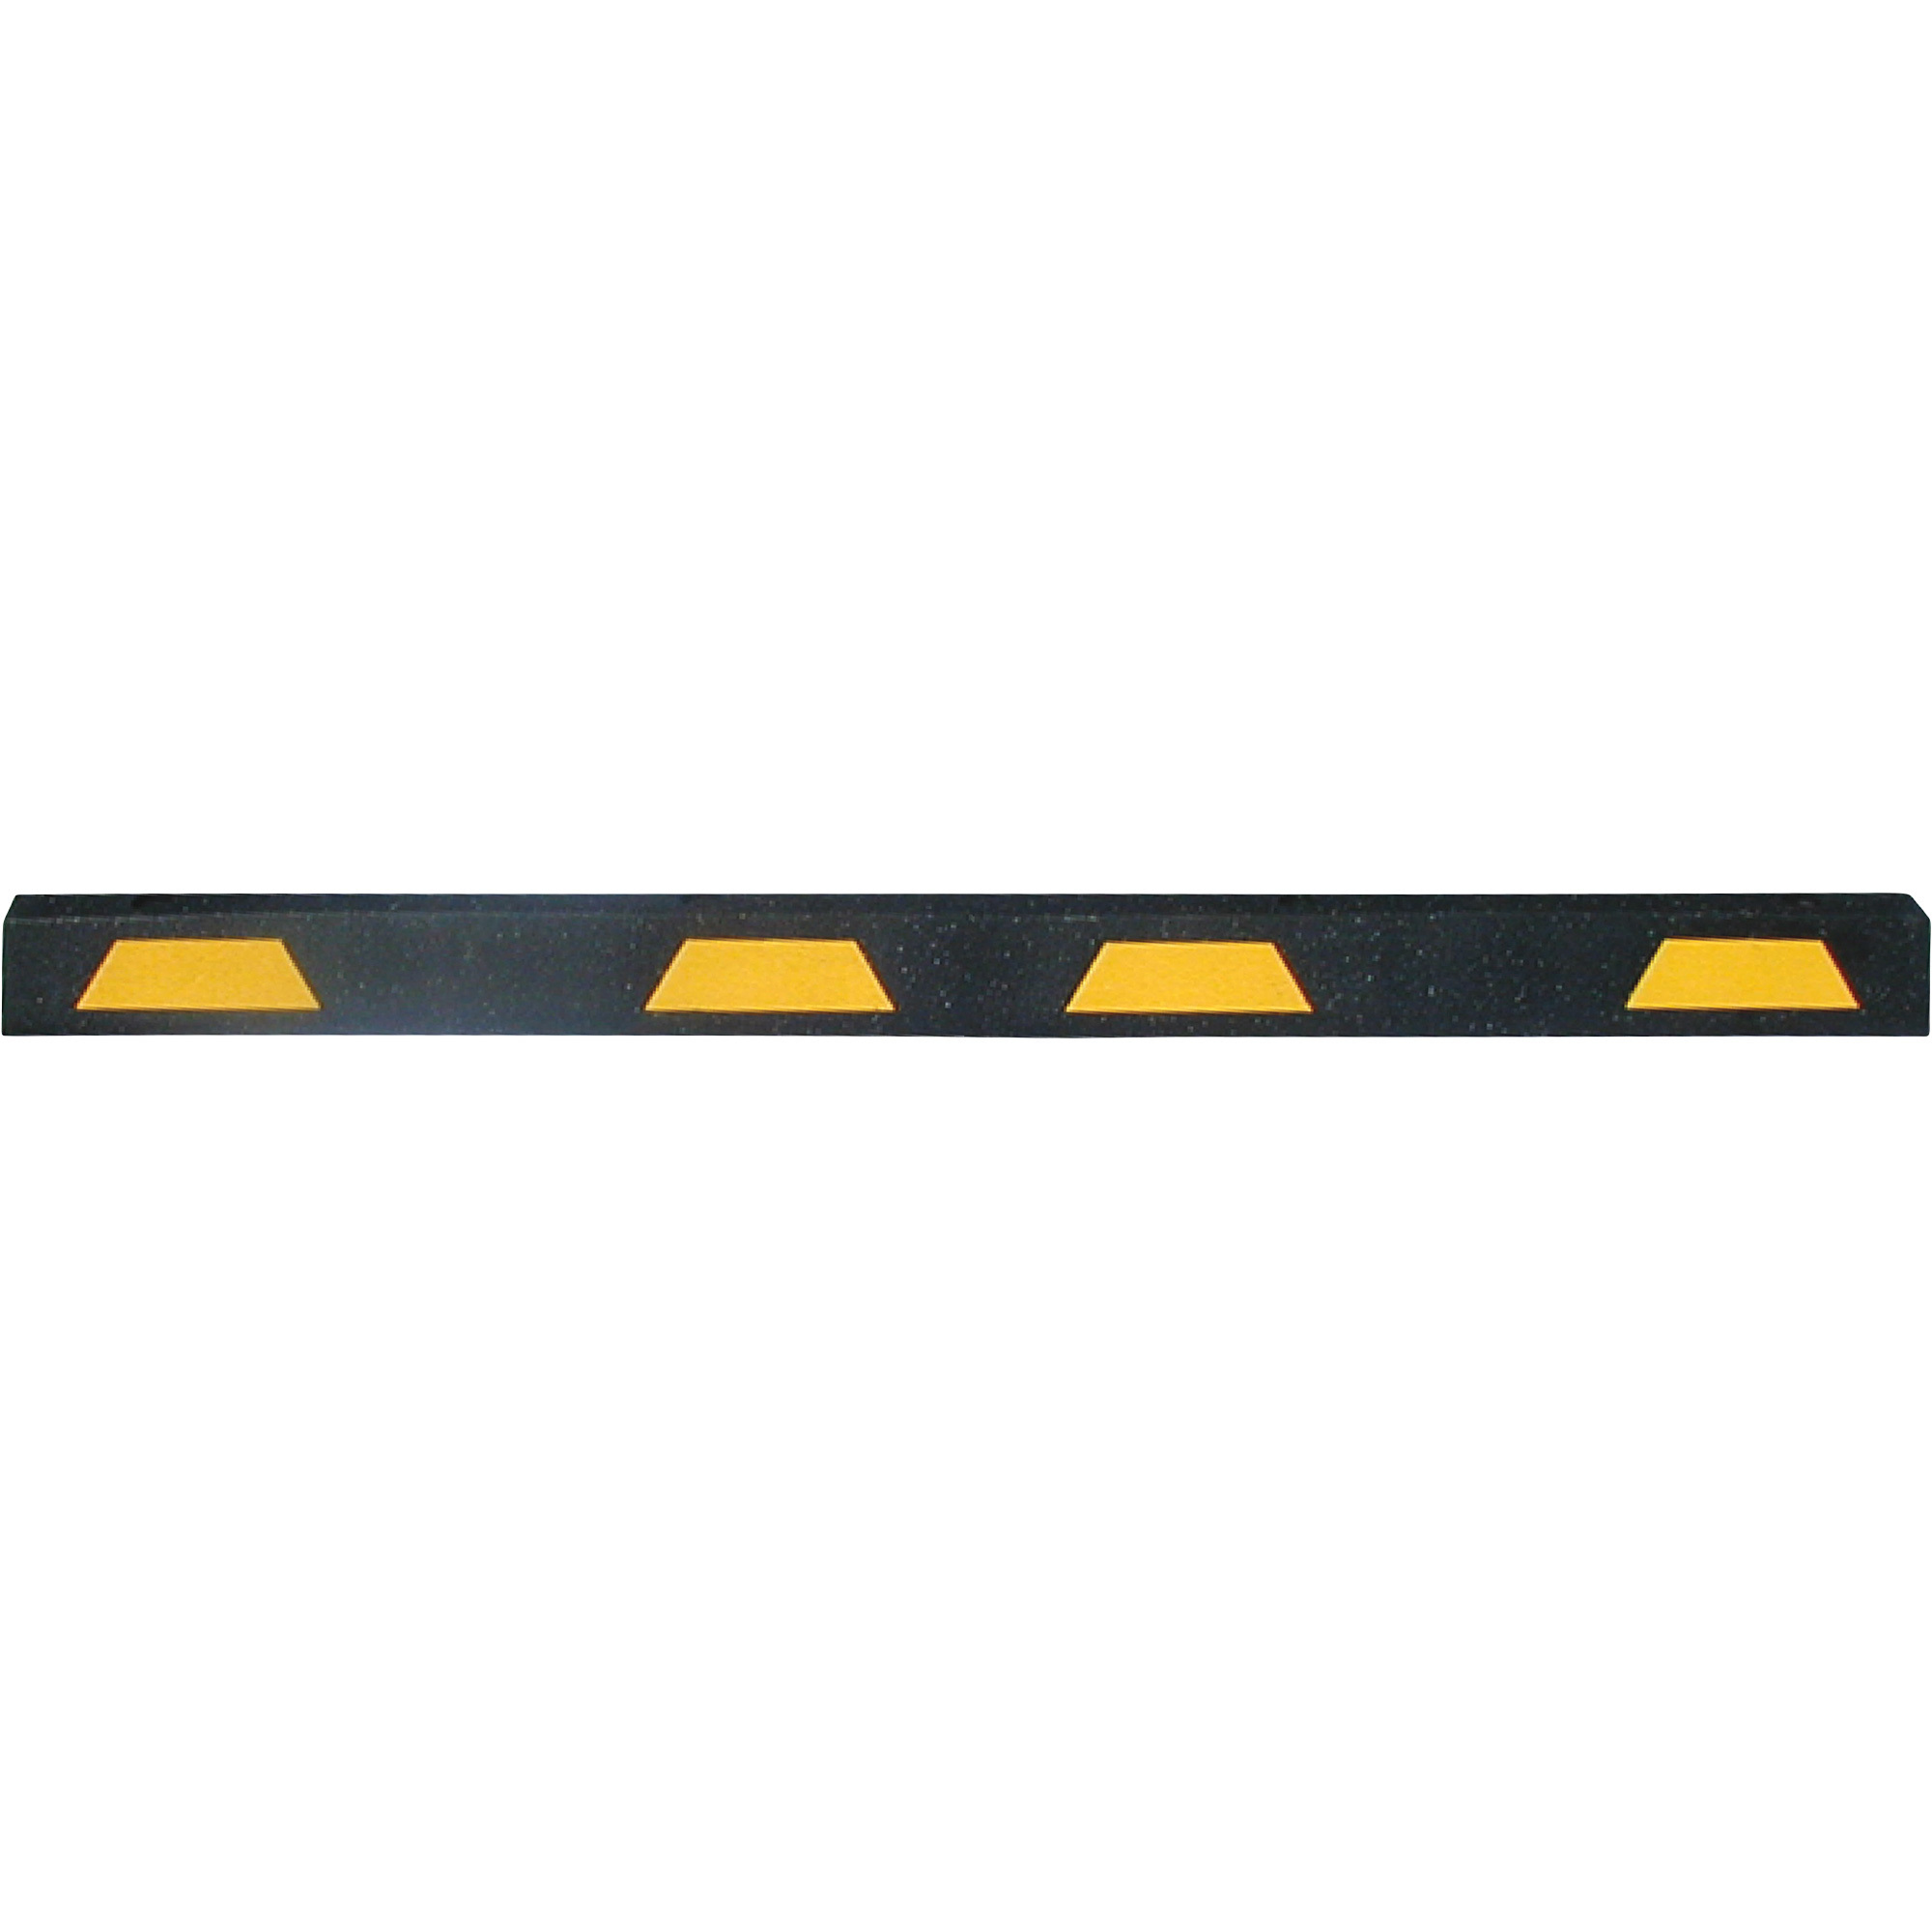 Plasticade 6ft. Car Stop Parking Curb â Black with Yellow Reflective Stripes, 72n.L x 6Inch W x 4 1/2Inch H, Model STN-6Y